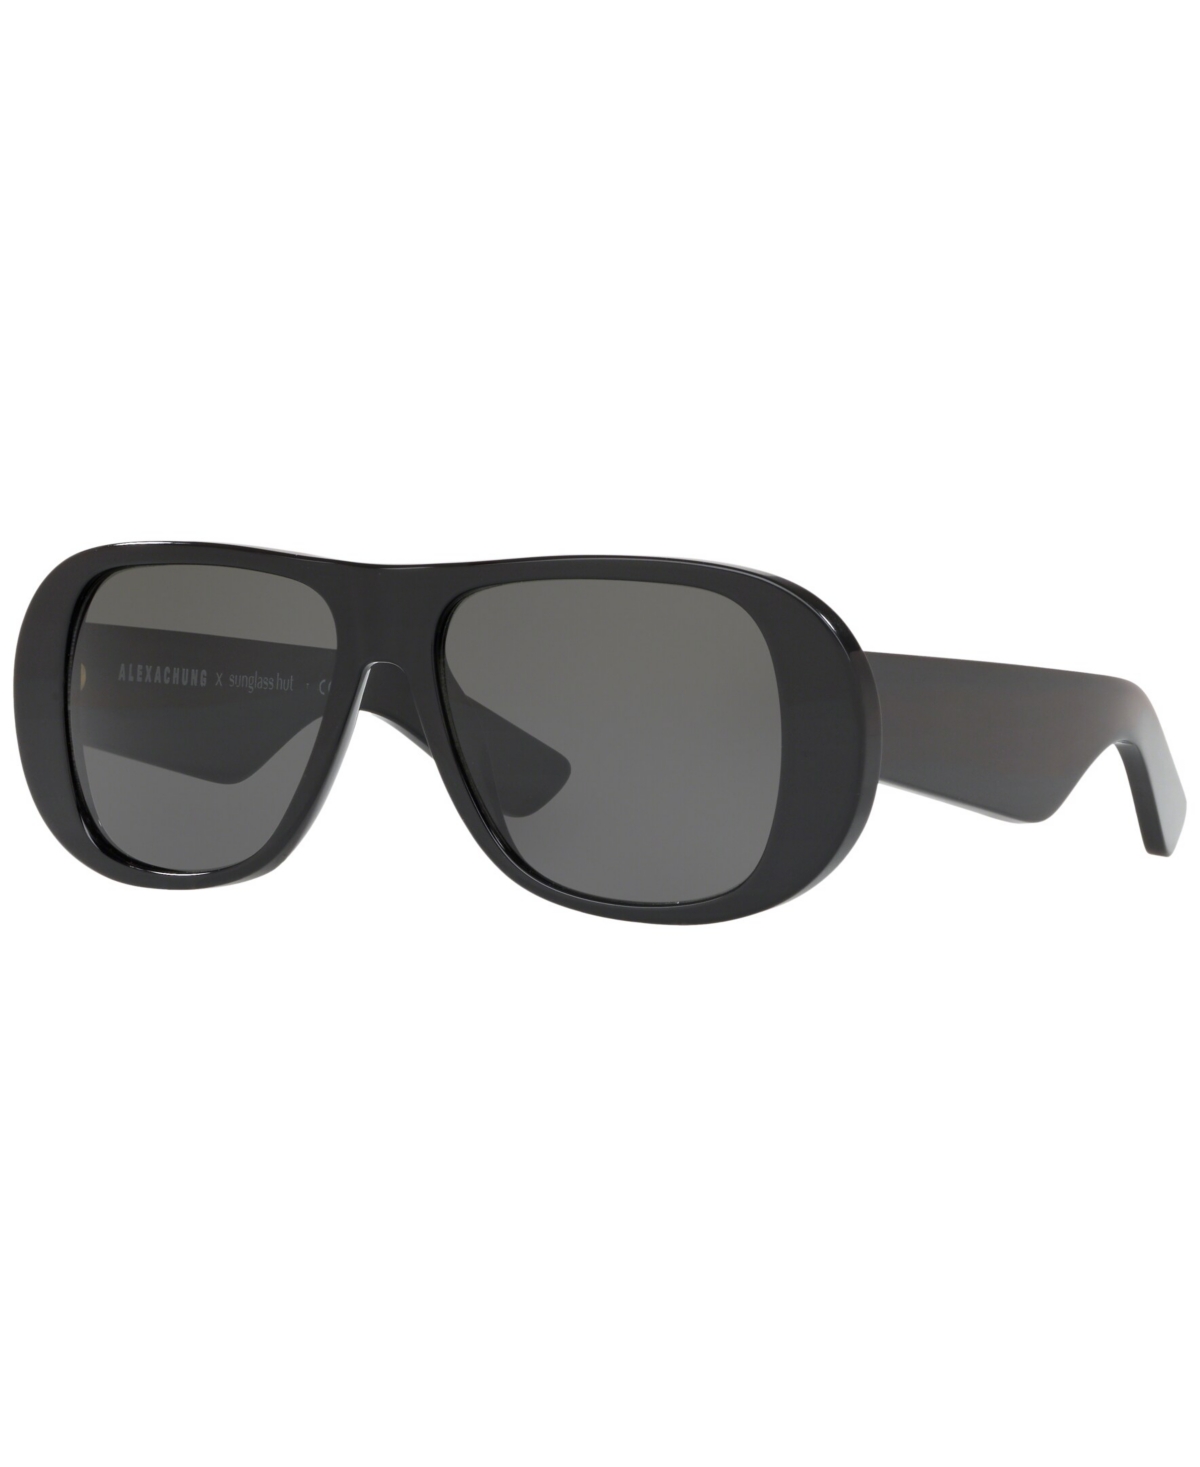 Sunglass Hut Collection Women's Sunglasses, Hu4004 In Black